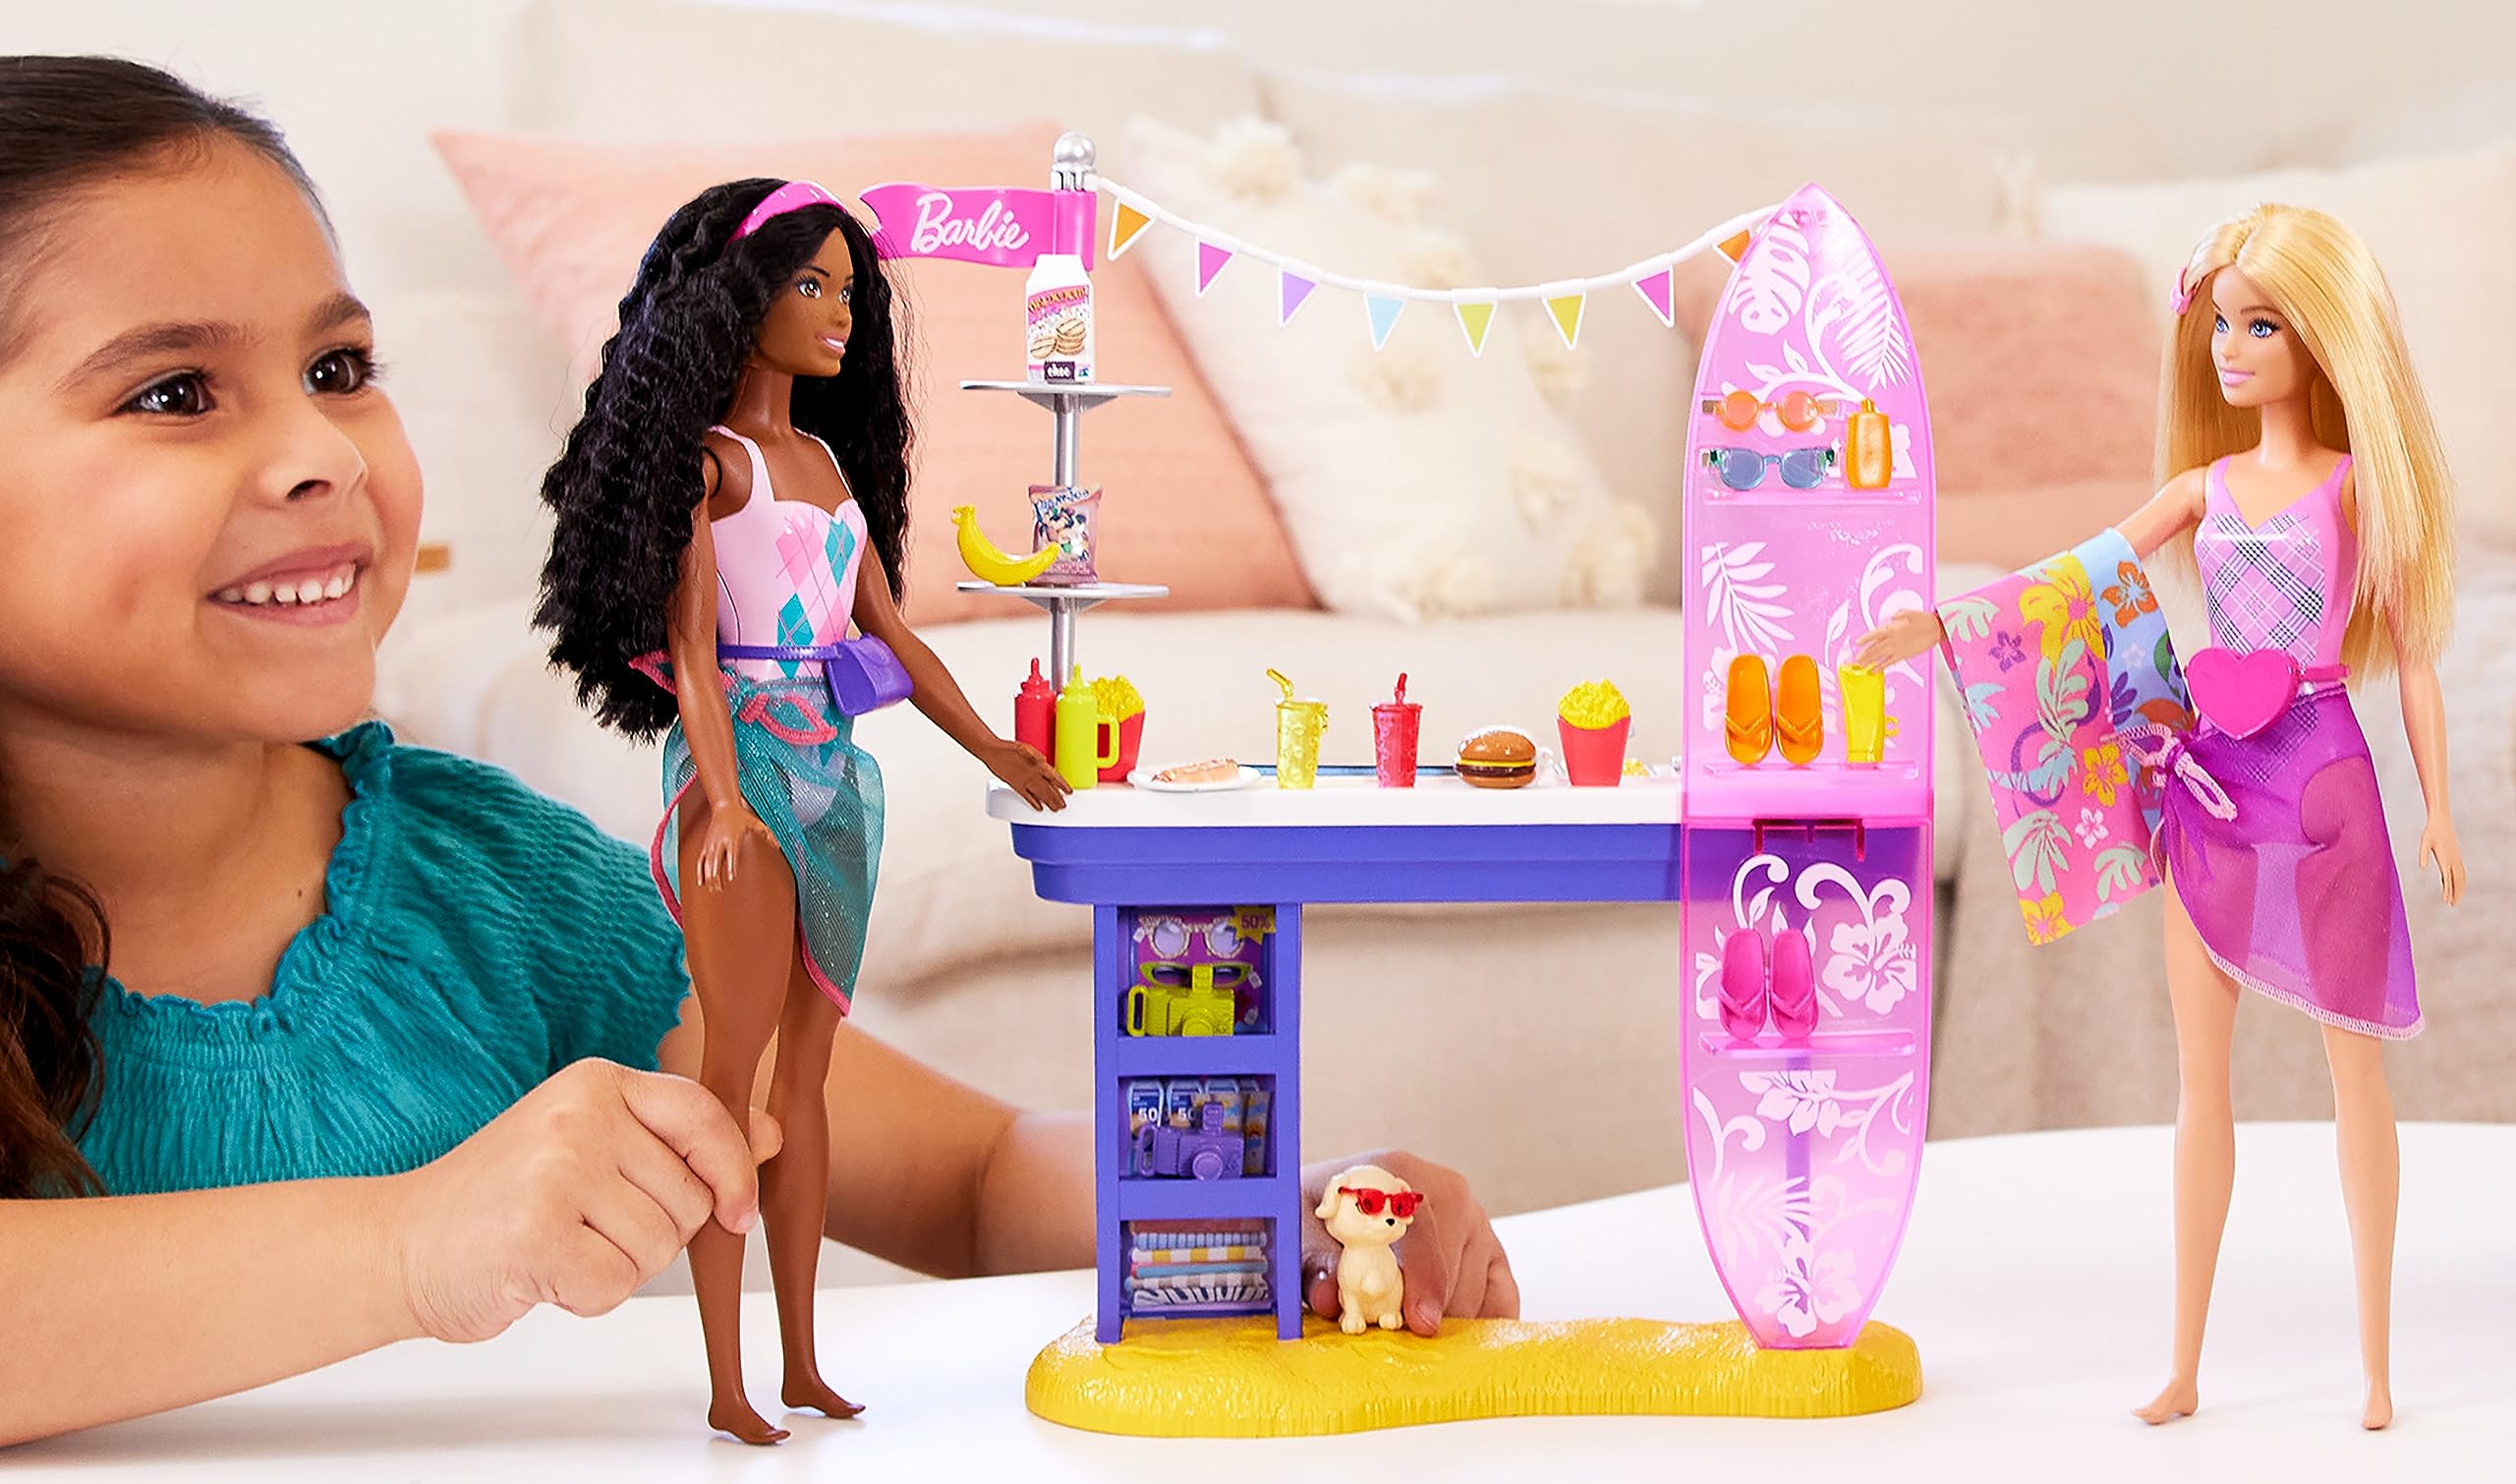 Barbie Dolls & Accessories Playset, Beach Boardwalk with Barbie “Brooklyn” & “Malibu” Dolls, Food Stand, Kiosk & 30+ Accessories